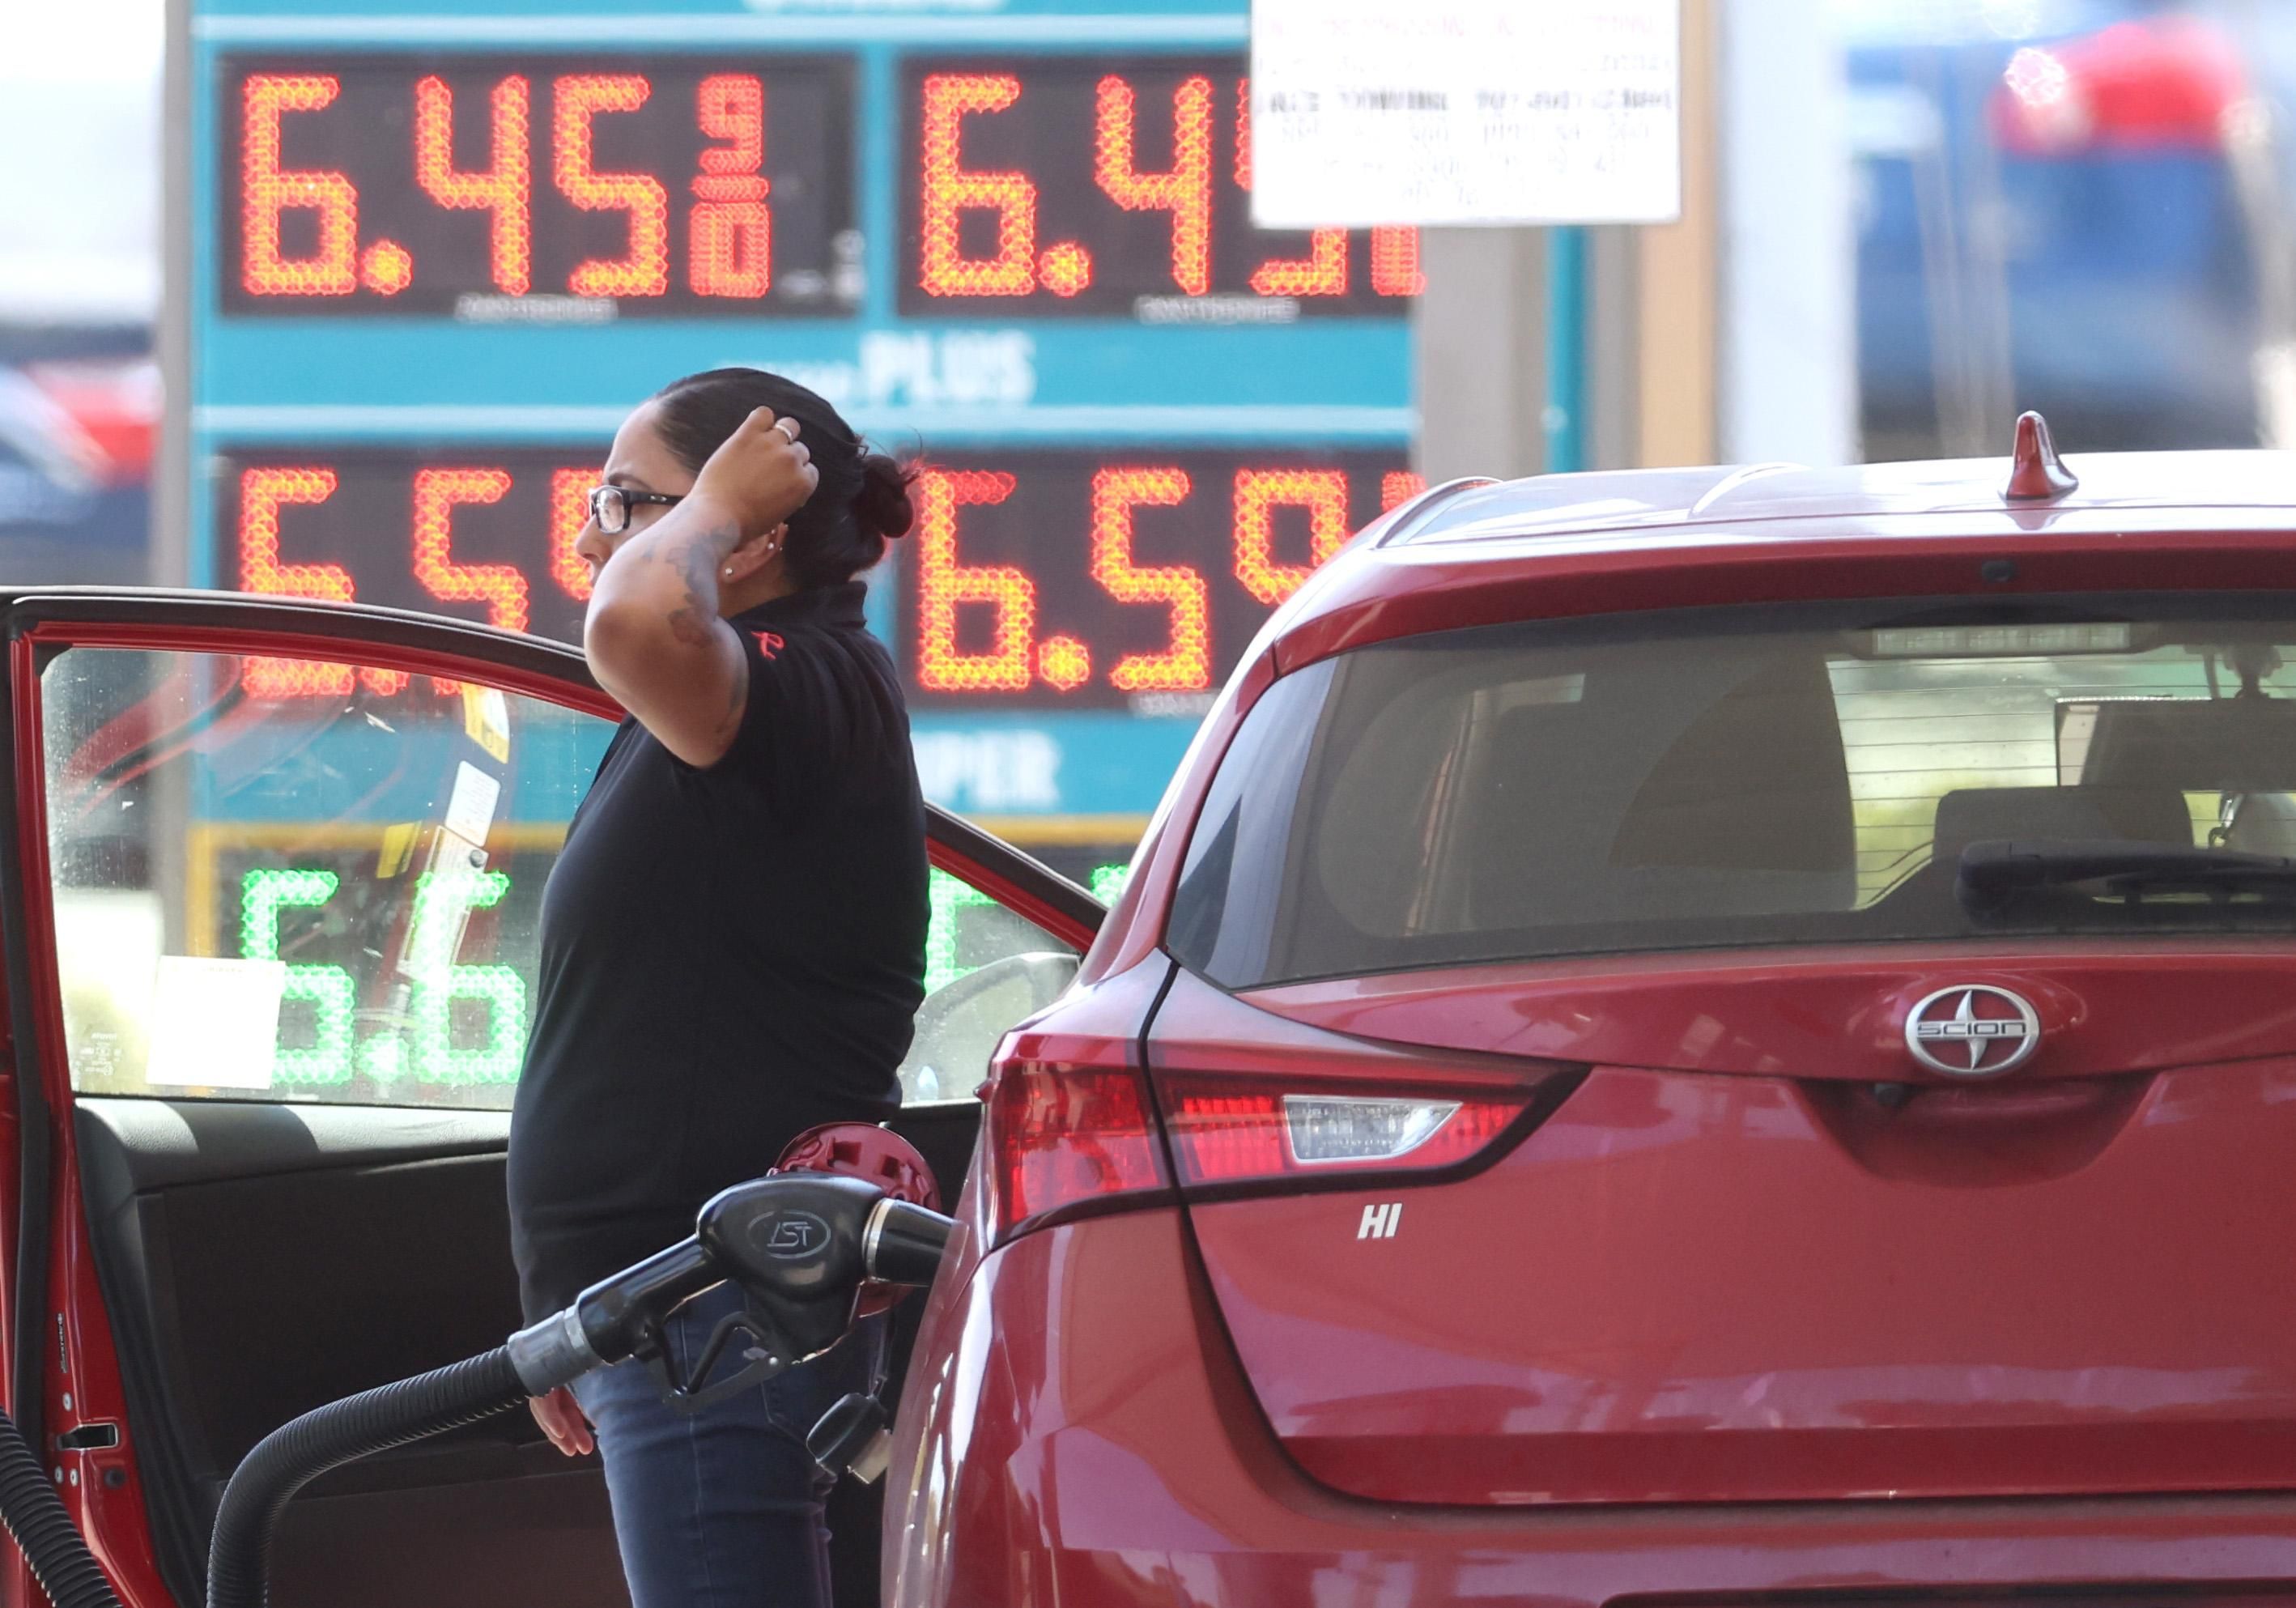 A customer refuels their car at a gas station in Petaluma, California on May 18, 2022.